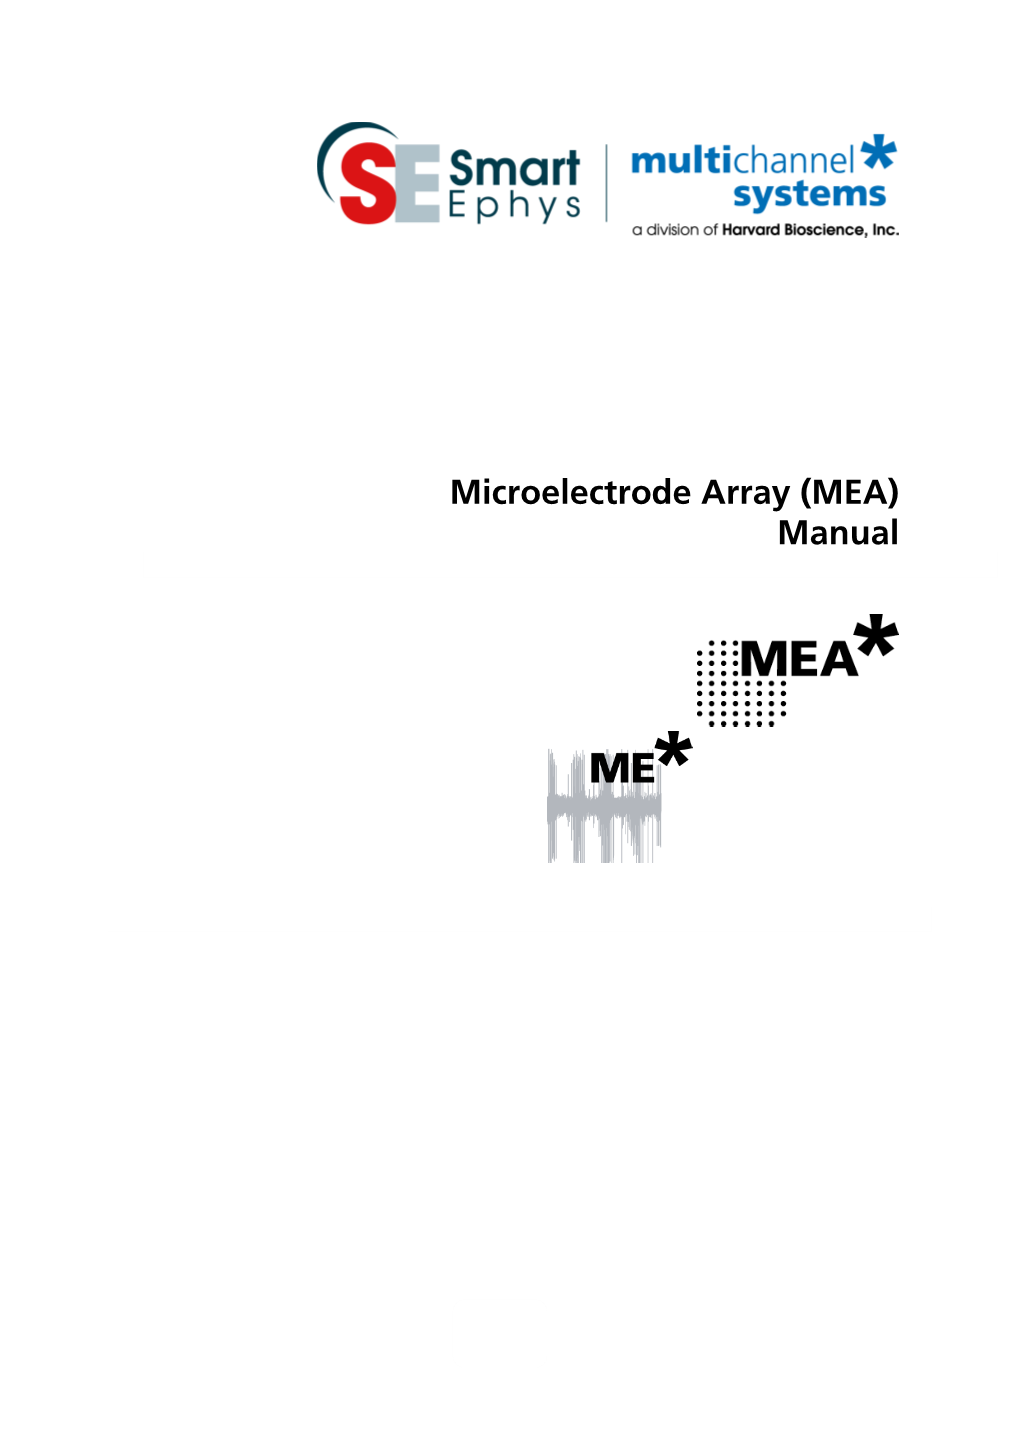 Microelectrode Array (MEA) Manual